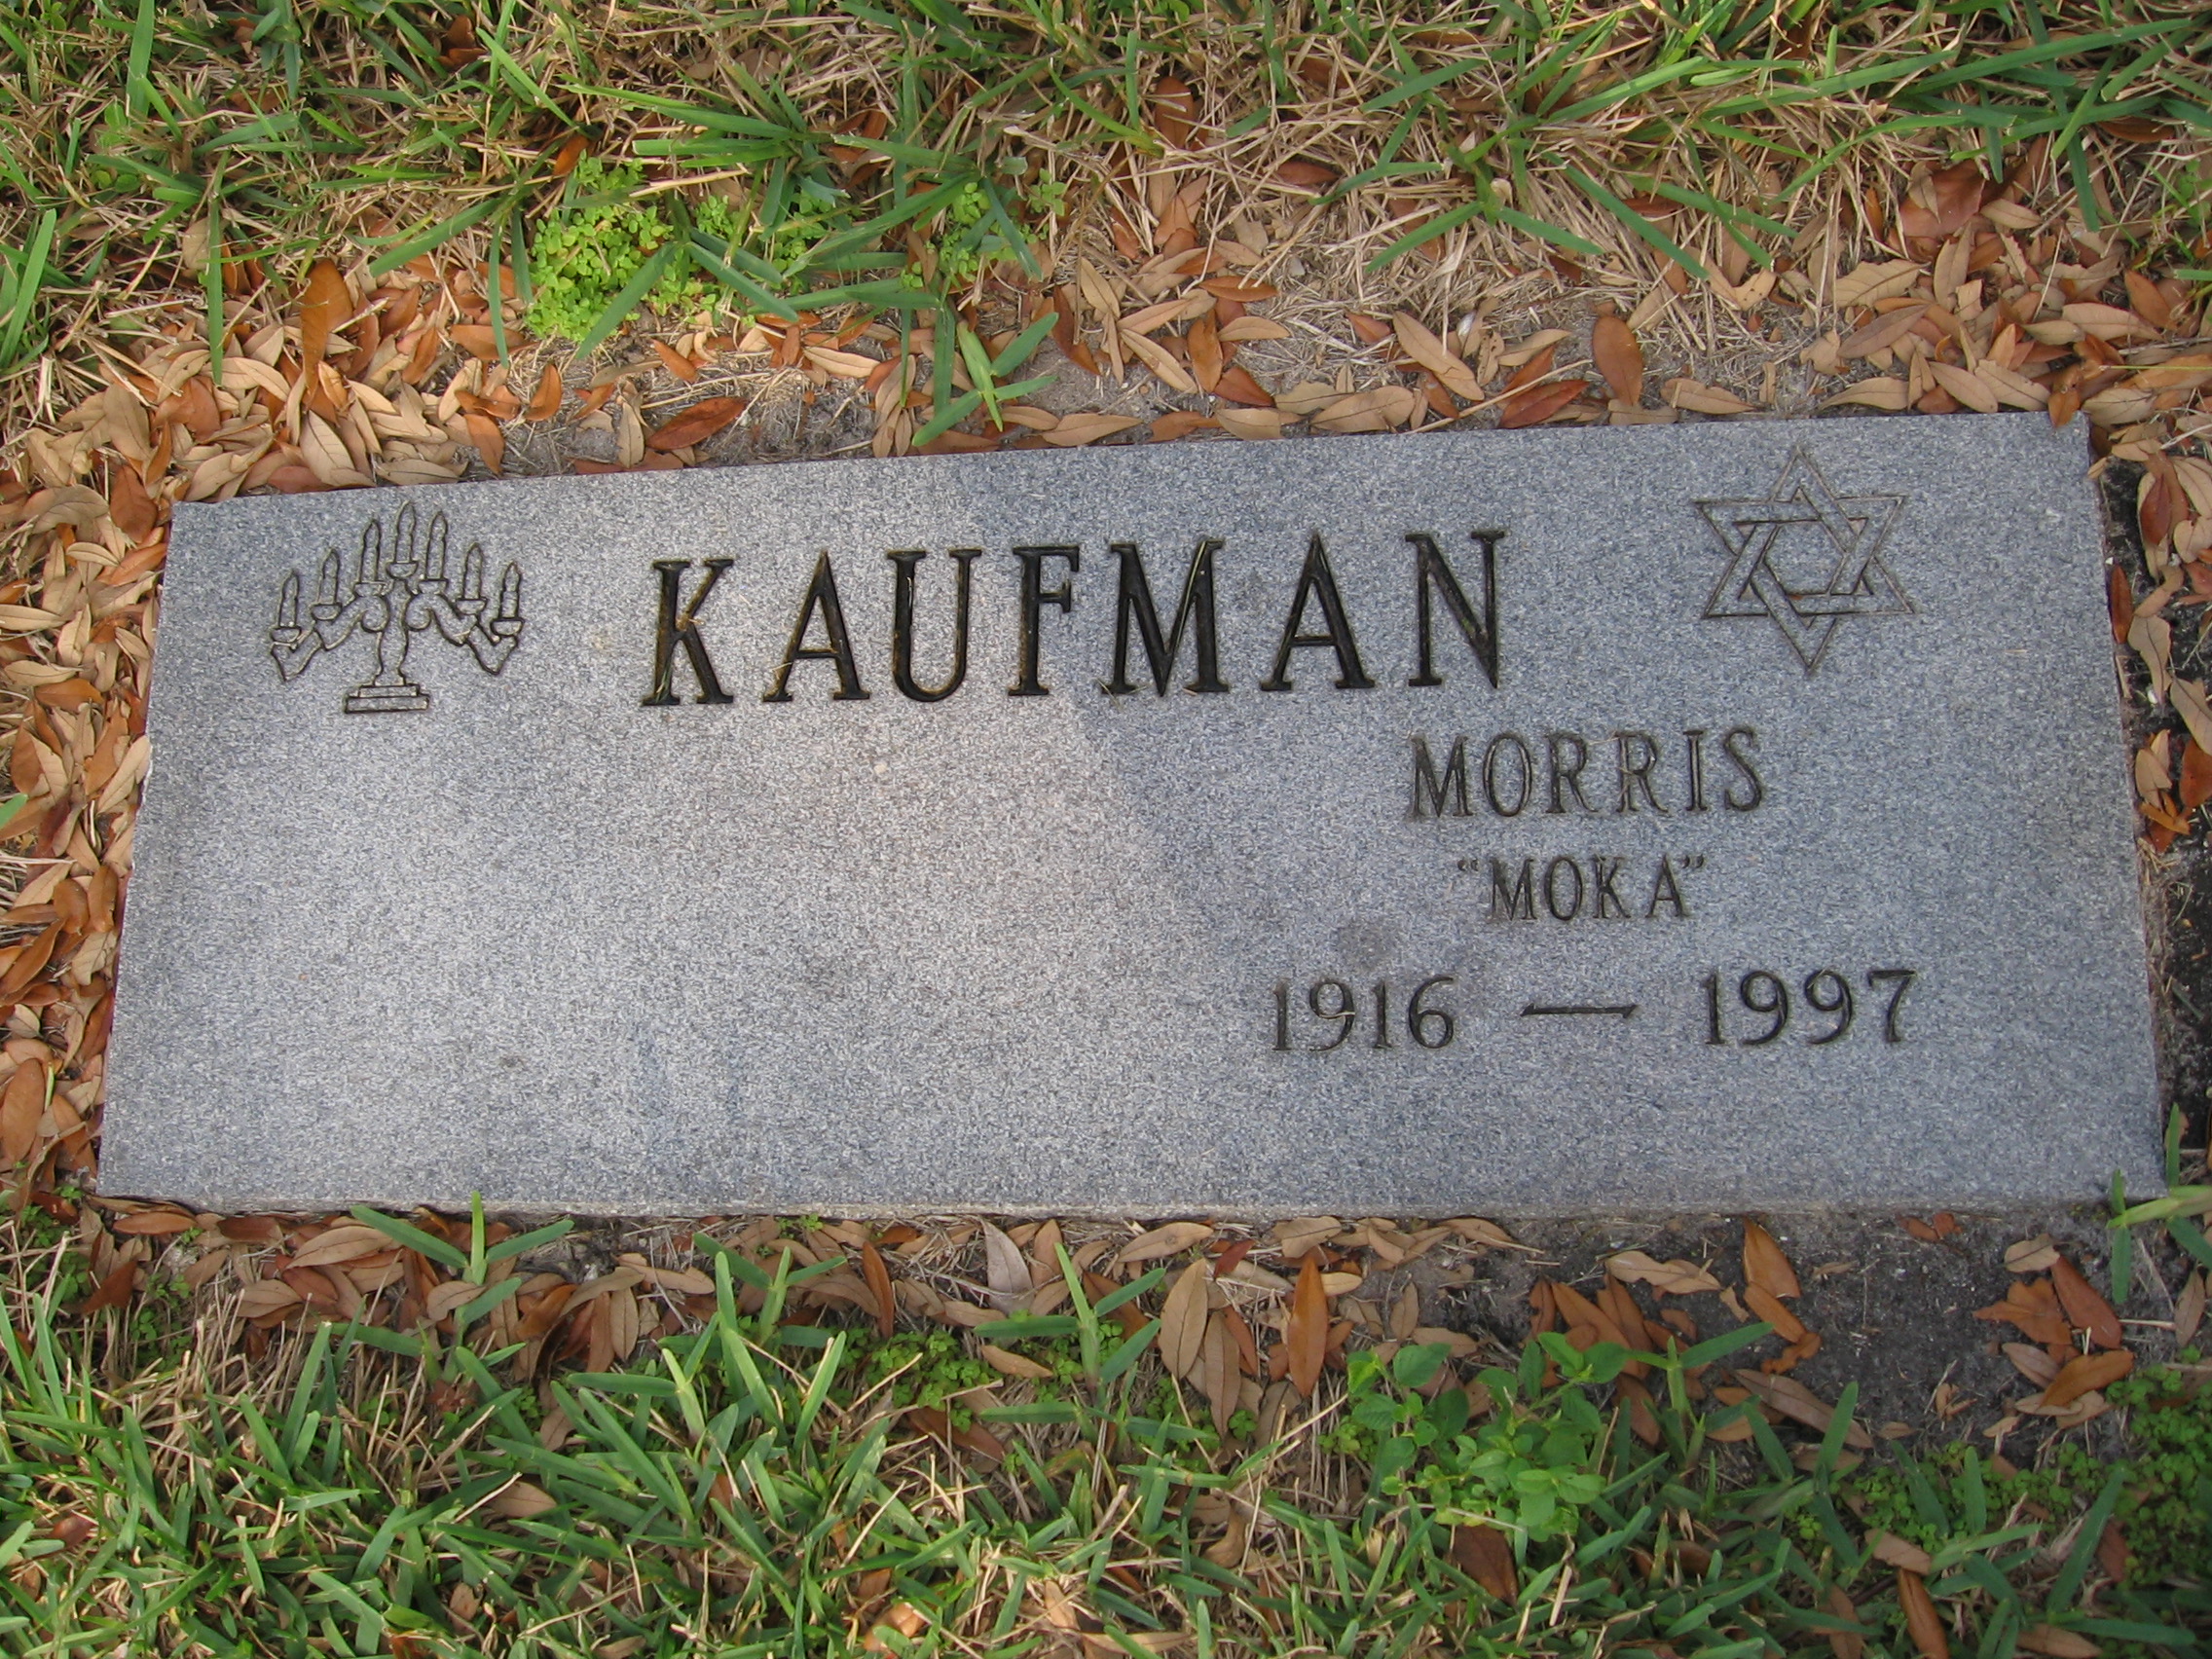 Morris "Moka" Kaufman